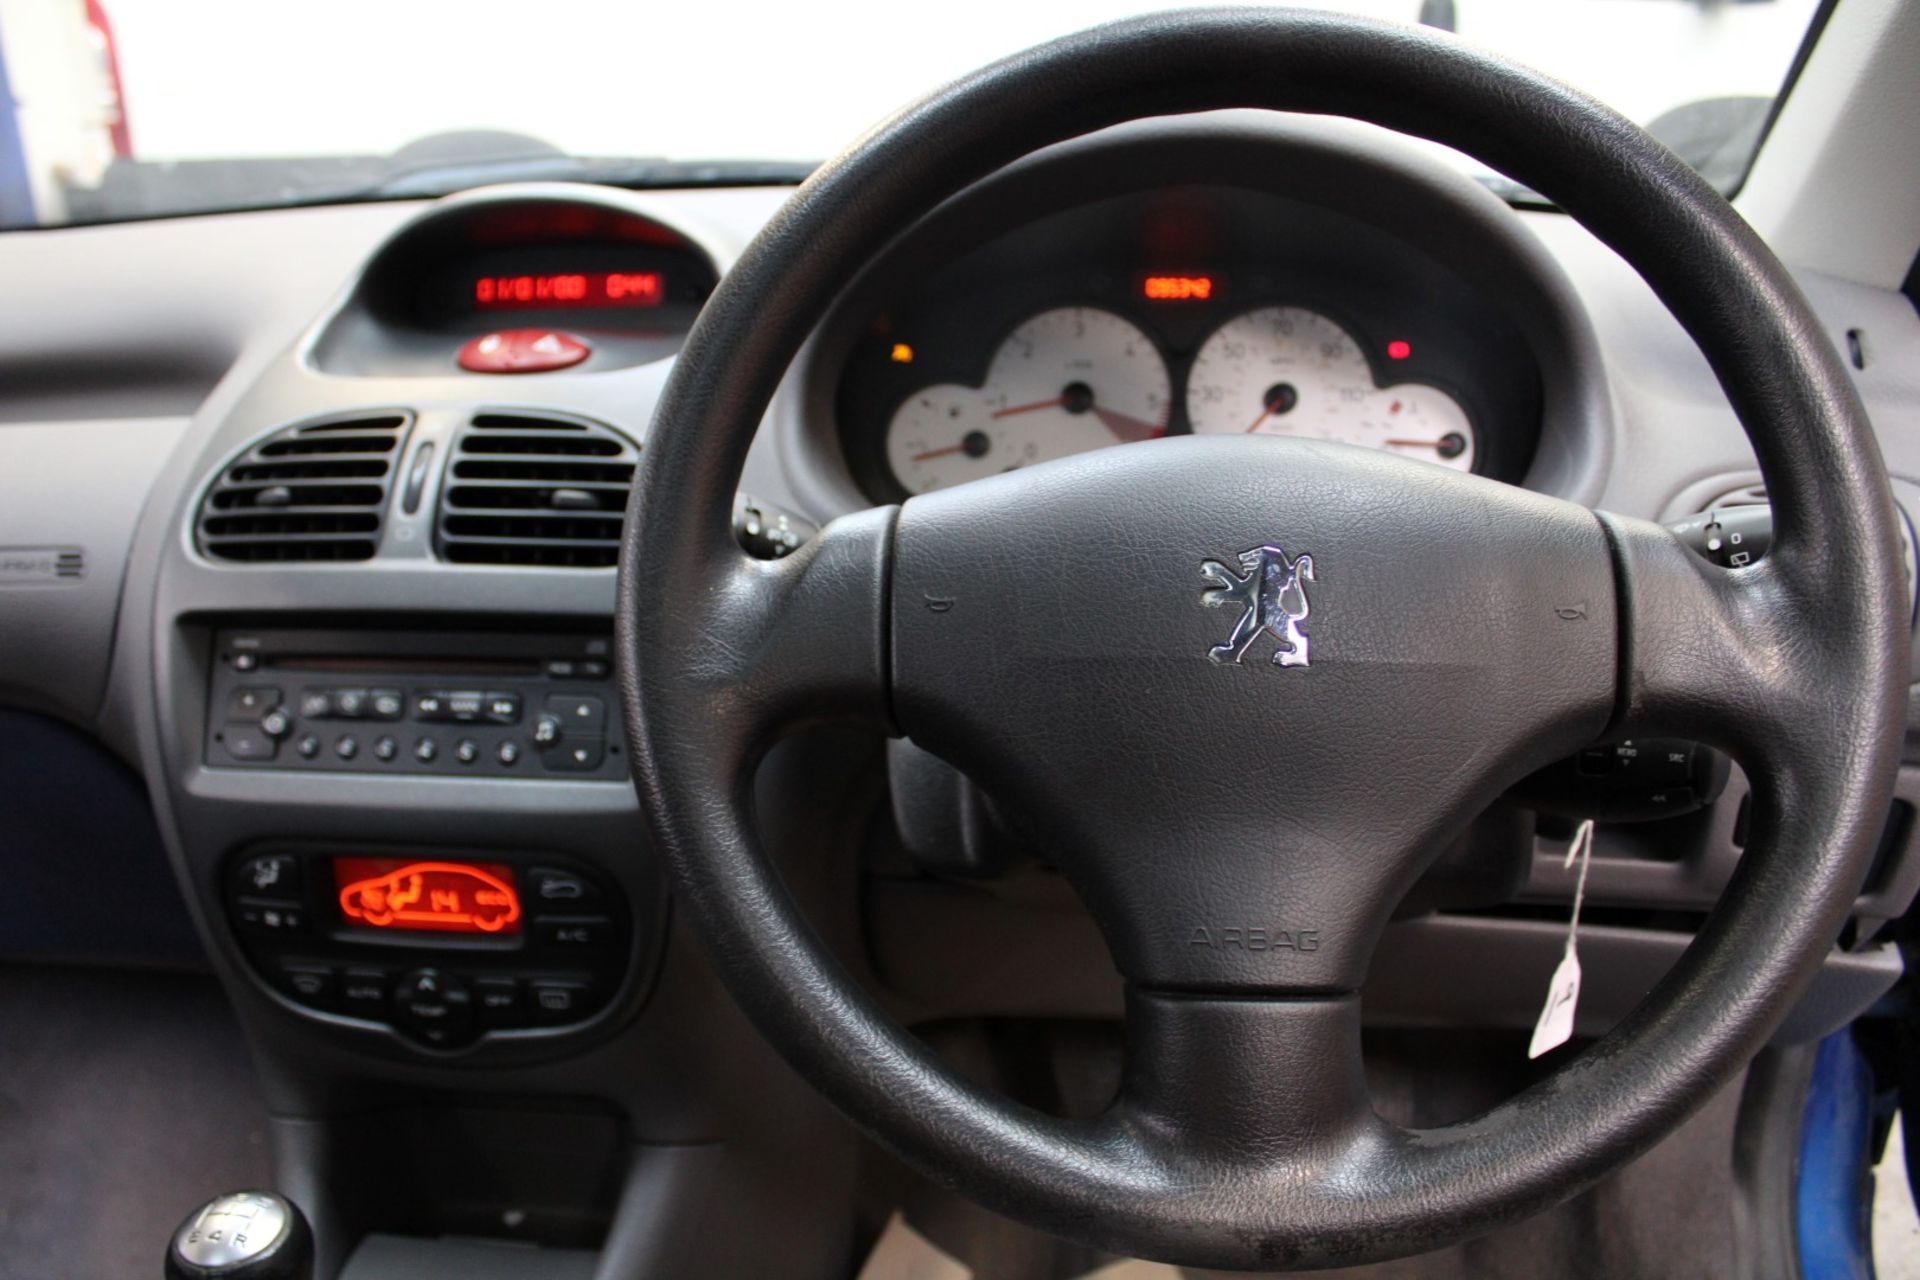 05 05 Peugeot 206 Sport HDI - Image 18 of 26